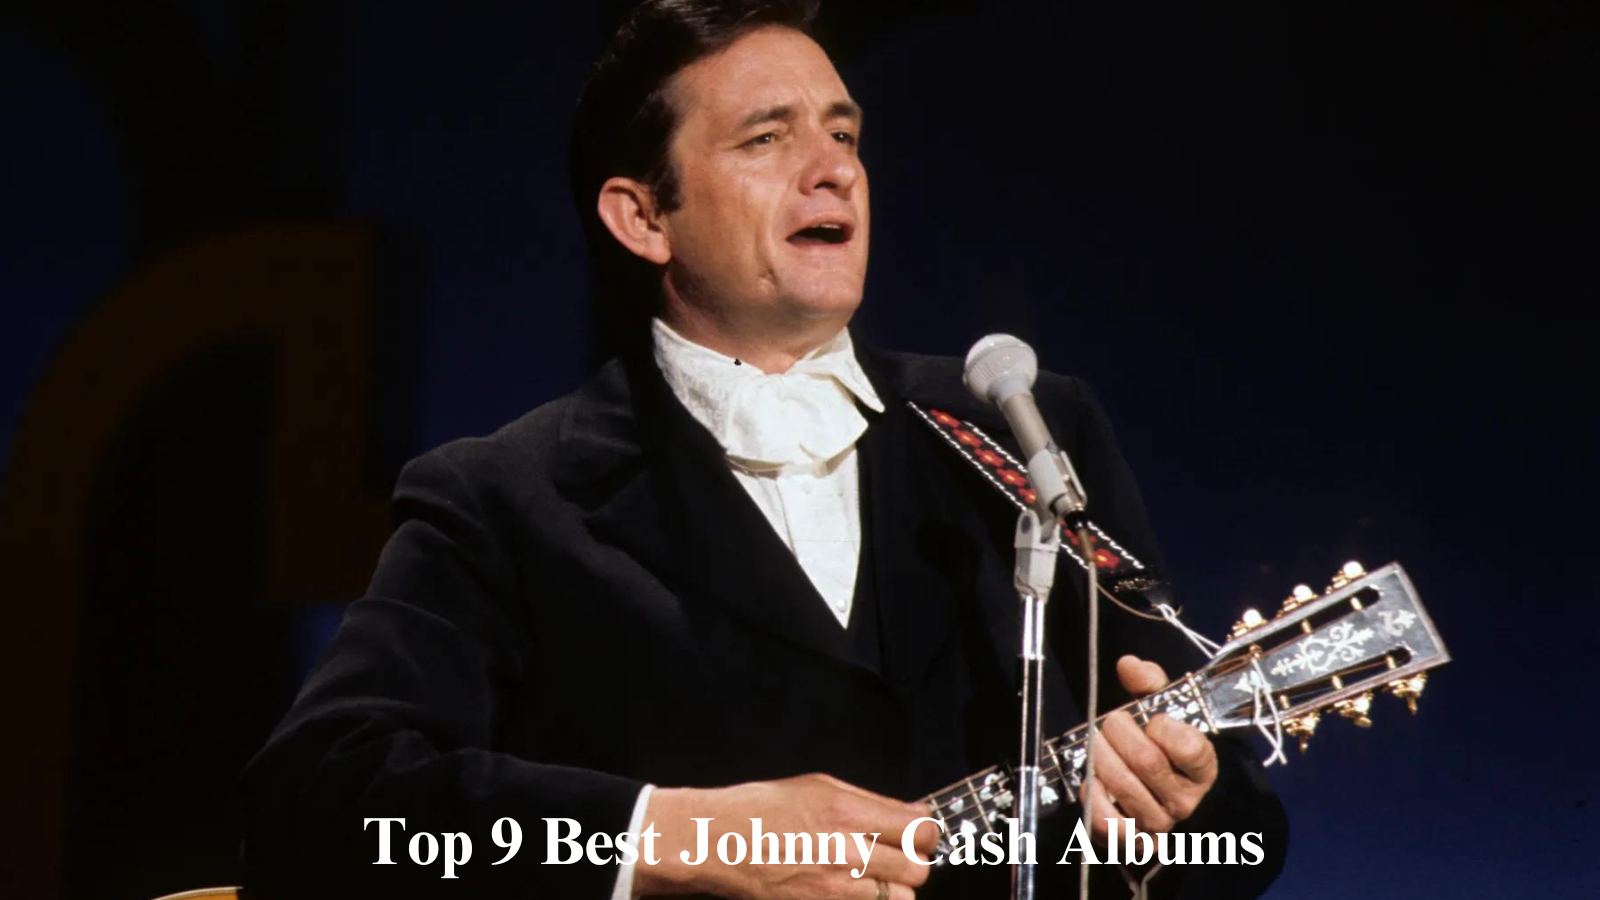 Top 9 Best Johnny Cash Albums